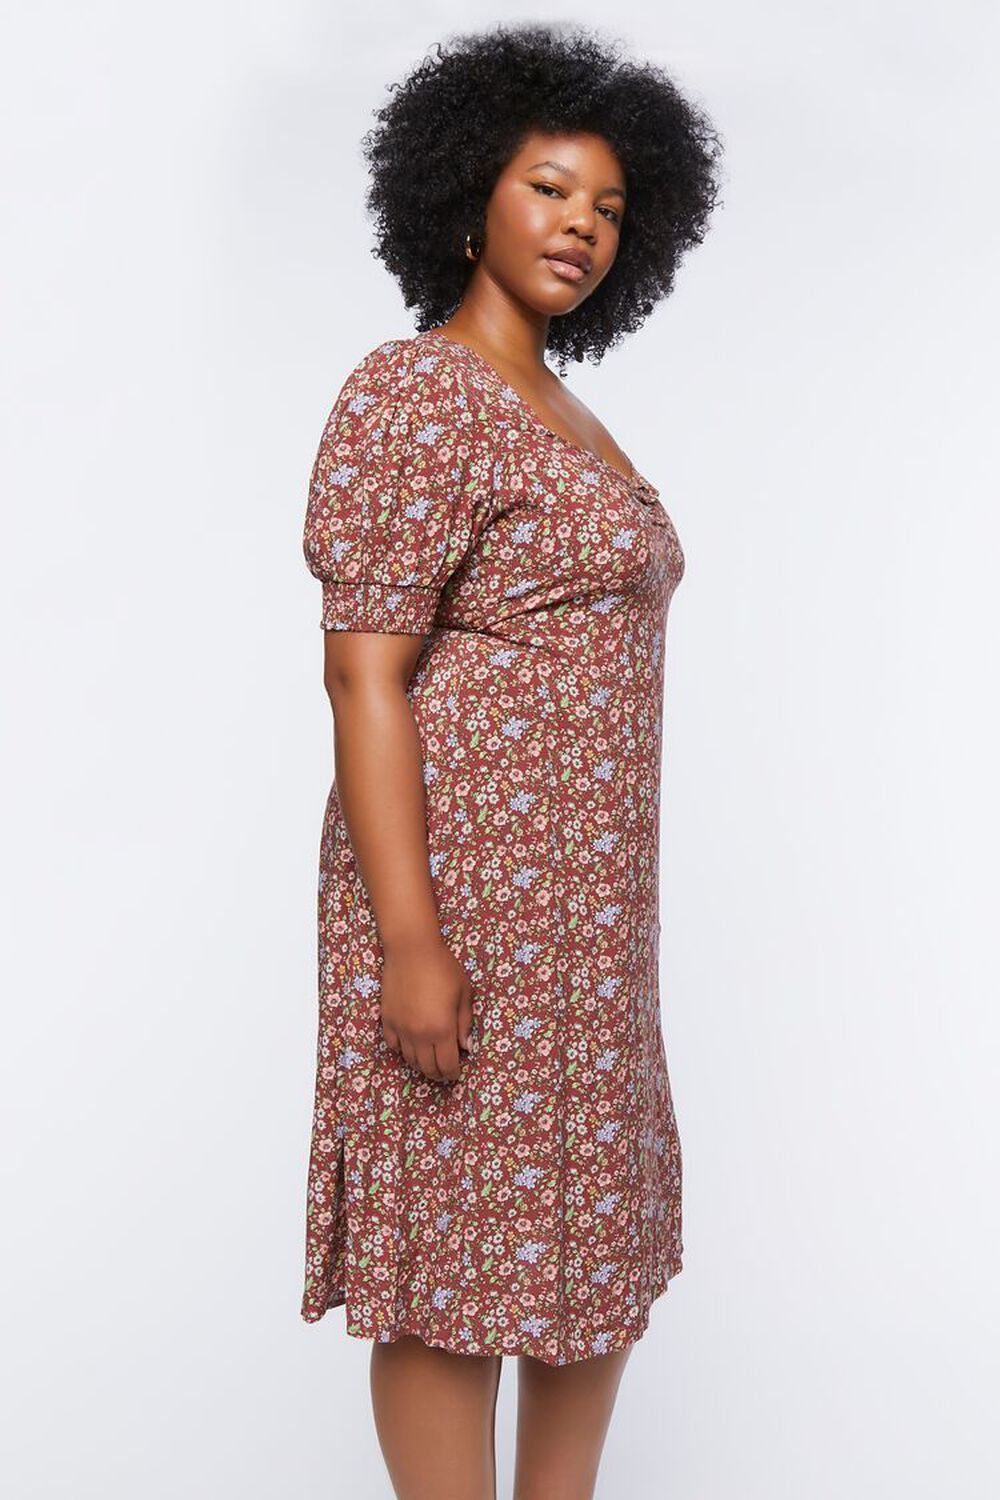 CURRANT/MULTI Plus Size Ditsy Floral Print Midi Dress, image 2